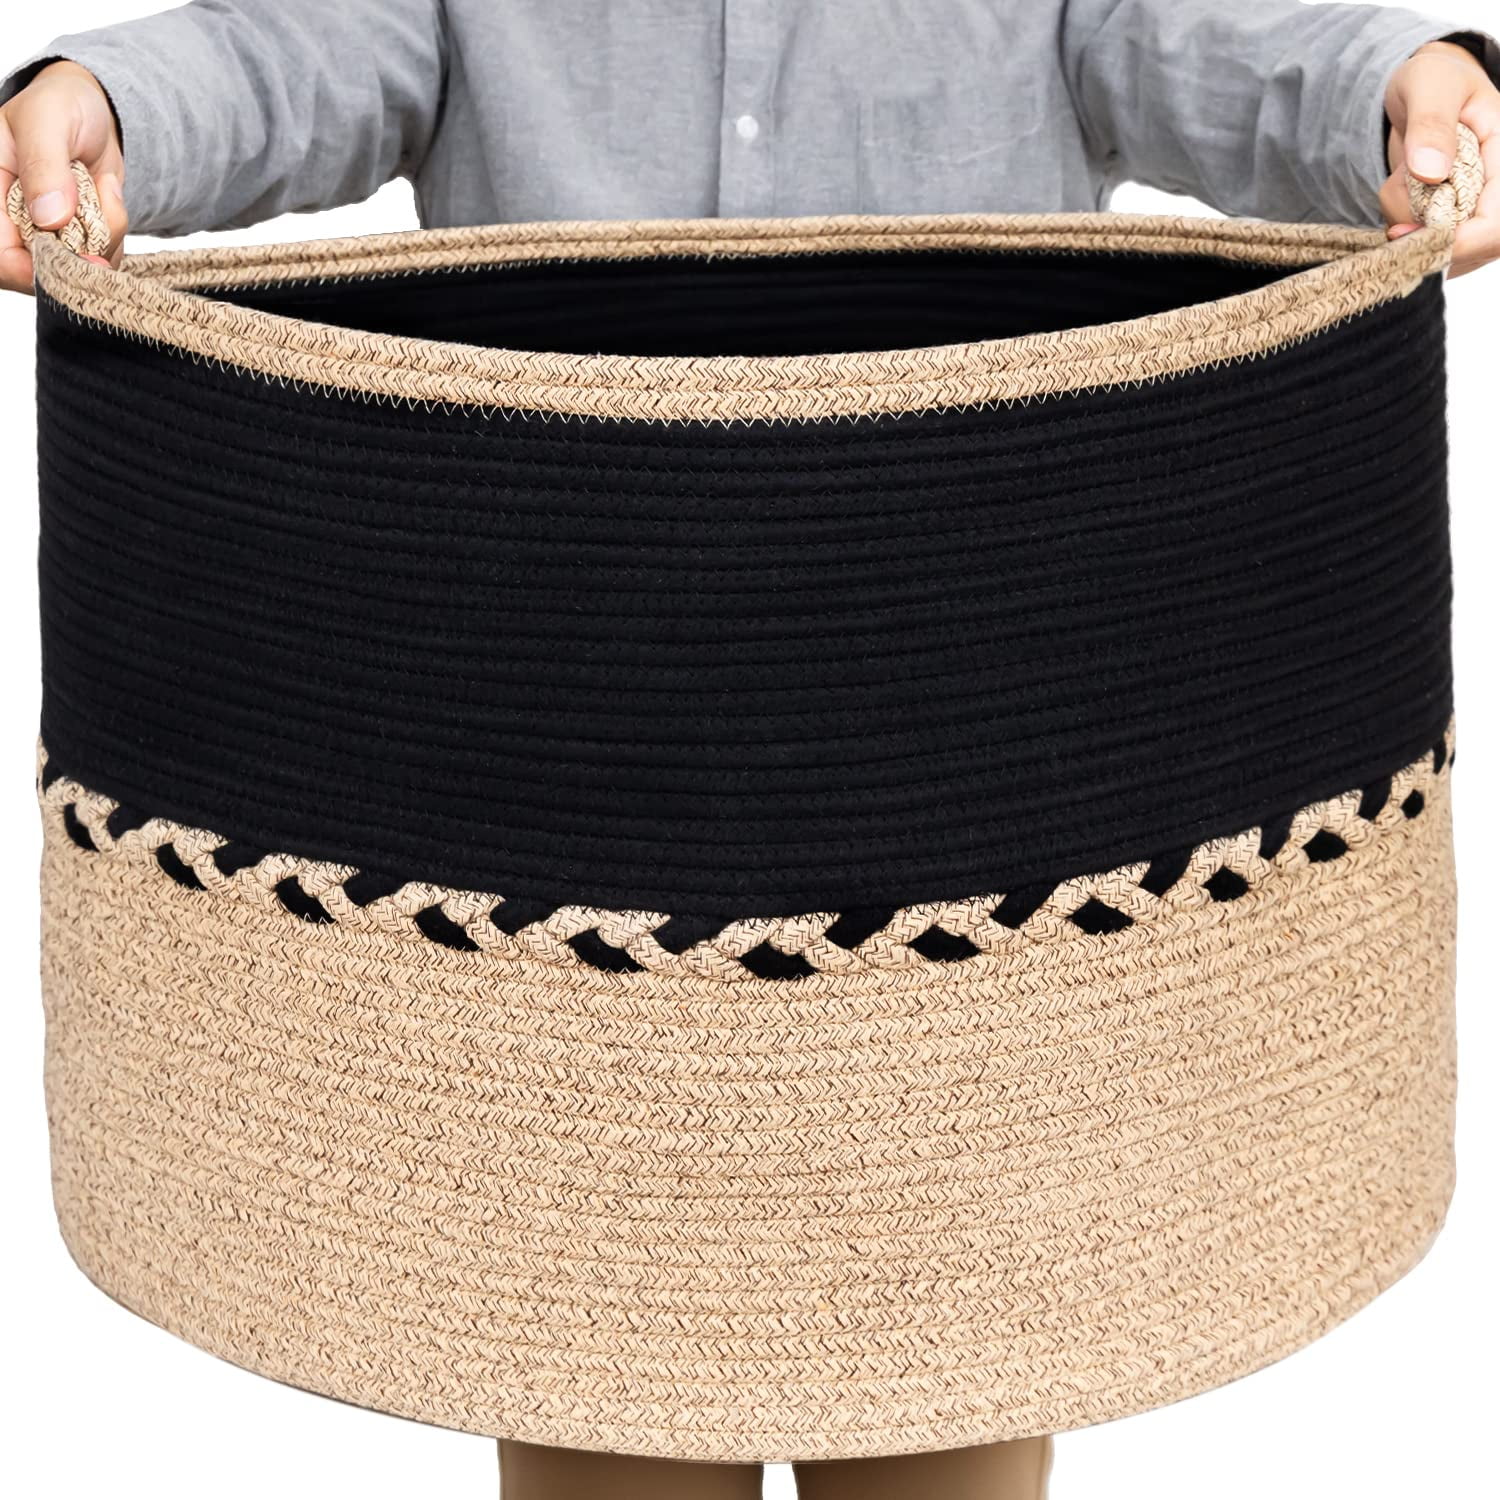 Cotton Rope Basket XXL Blanket Basket Large Woven Storage Basket Clothes LONTAN Design Black Storage Basket Round Cotton Rope Basket for Toys Real Leather Handles,20''X20''X13'' 